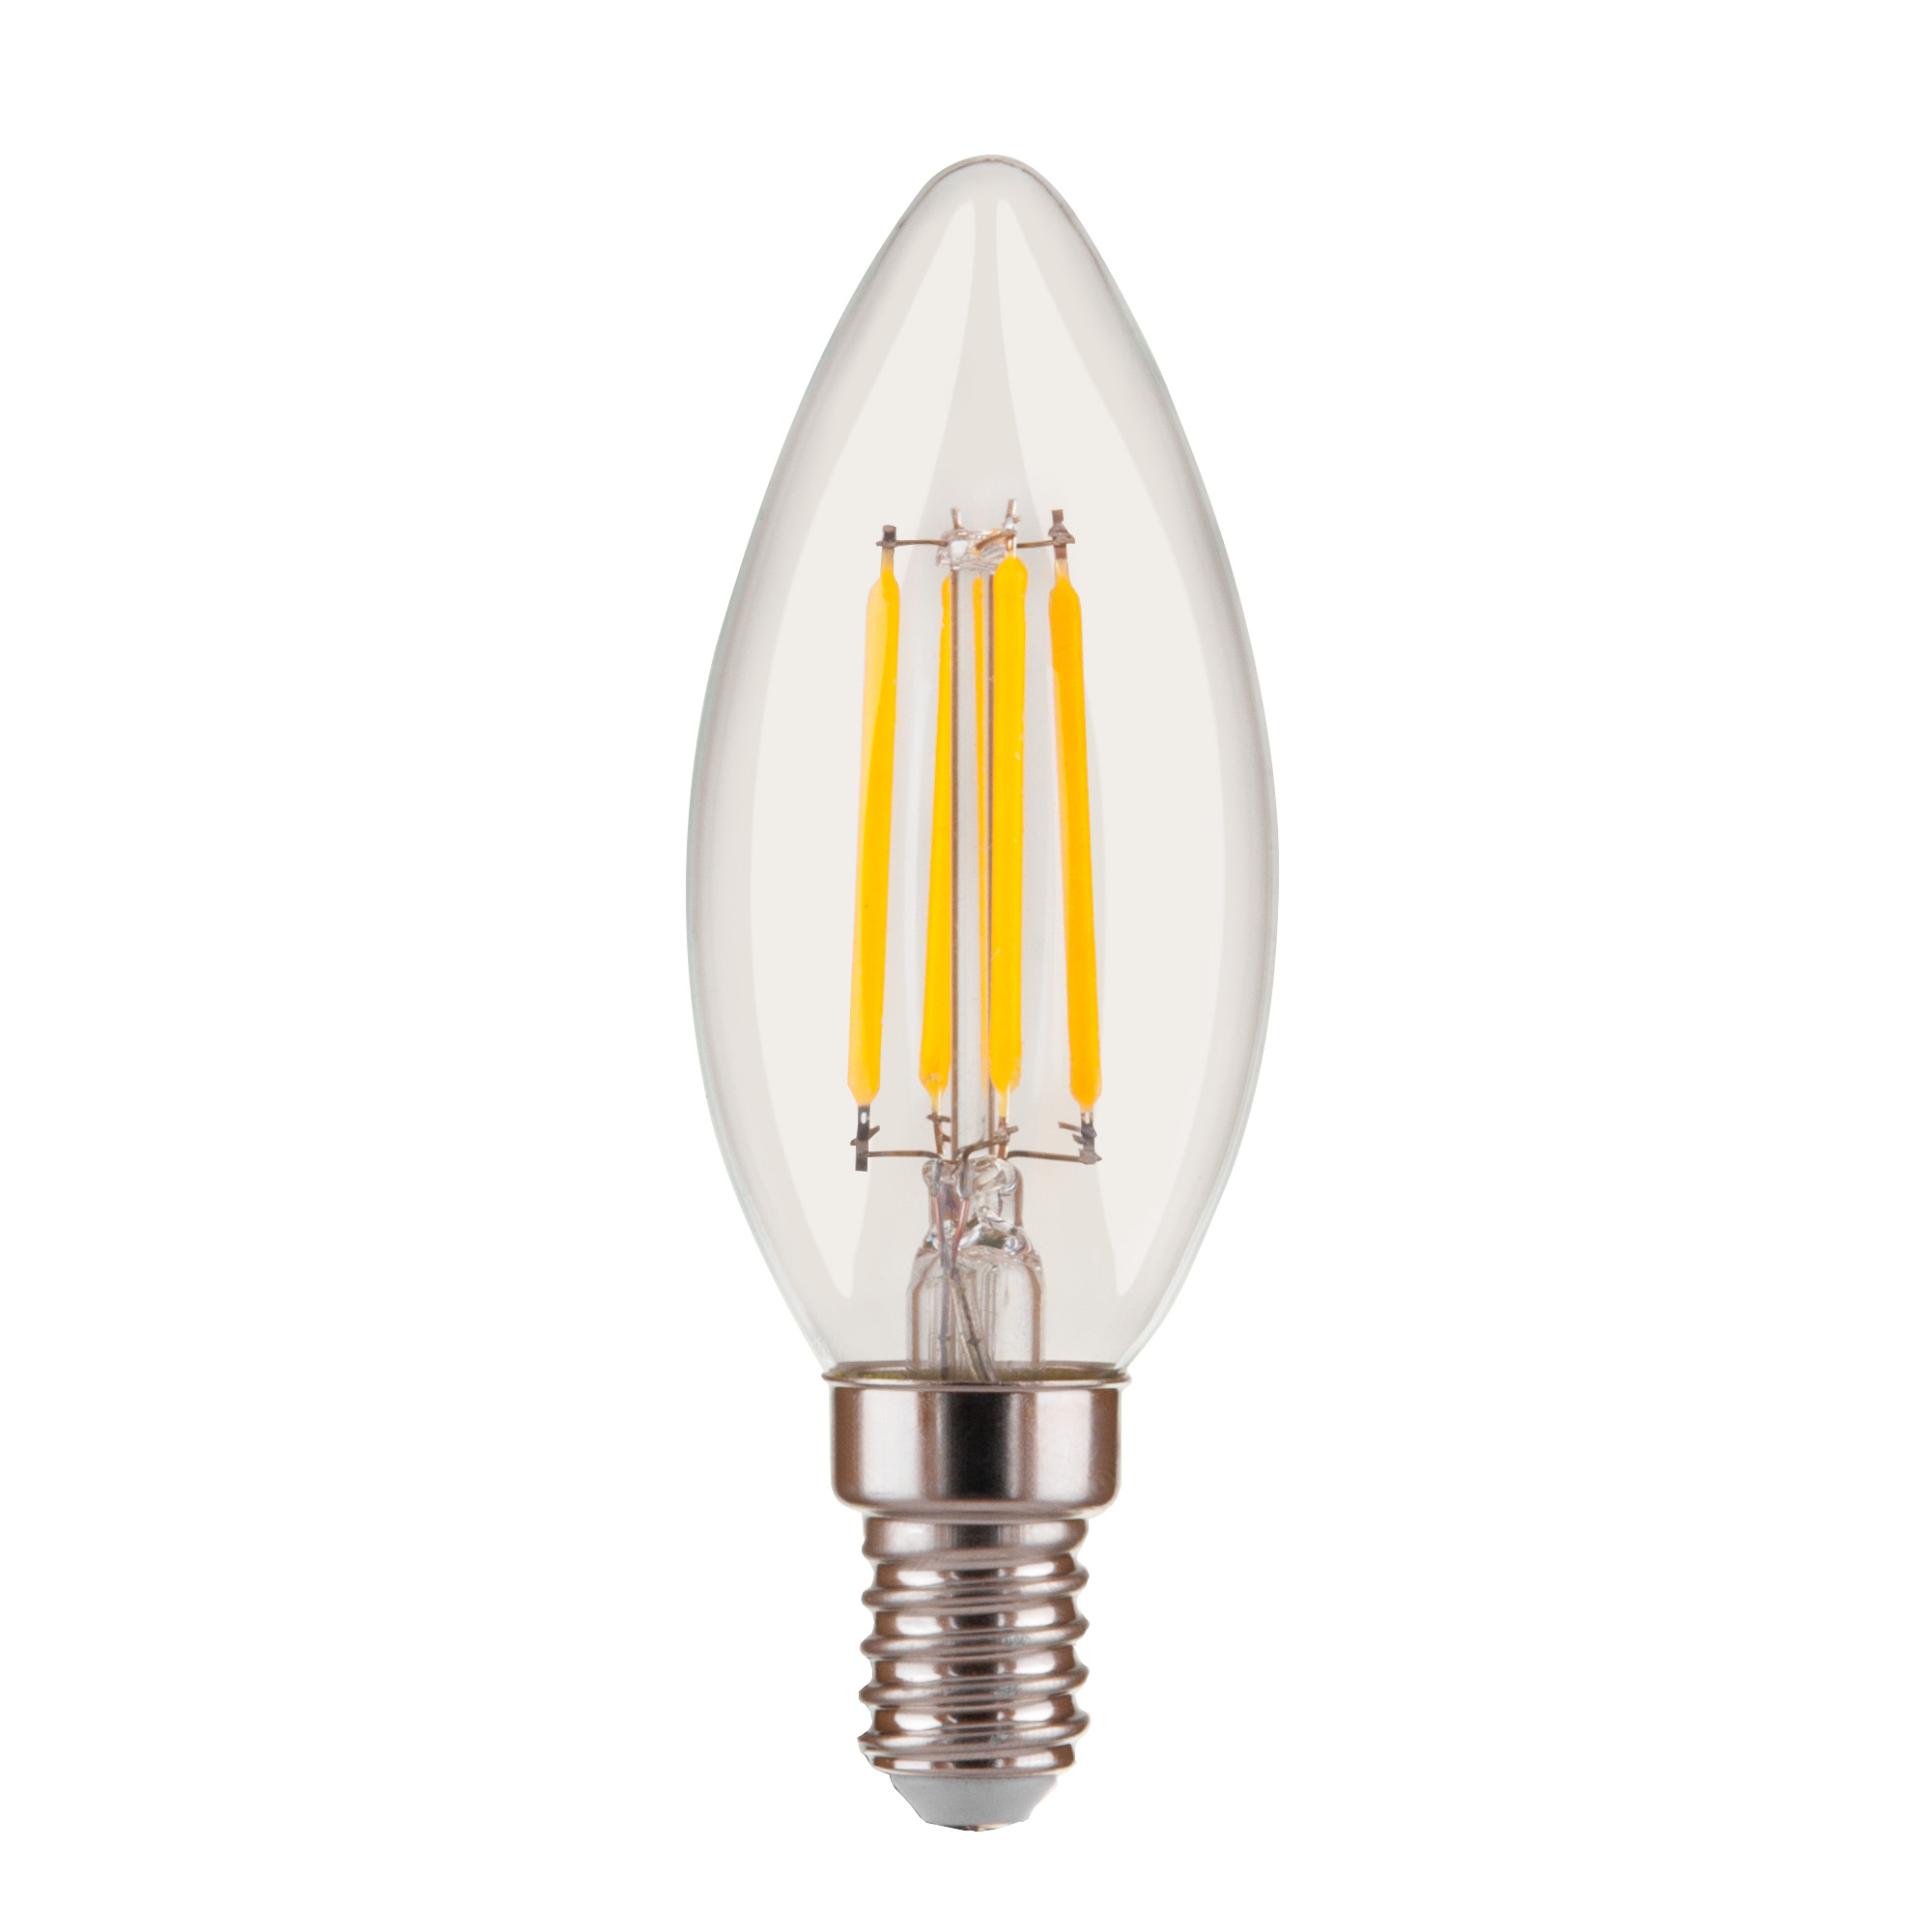 Филаментная светодиодная лампа Dimmable 5W 4200K E14 Elektrostandard BLE1401 a048724